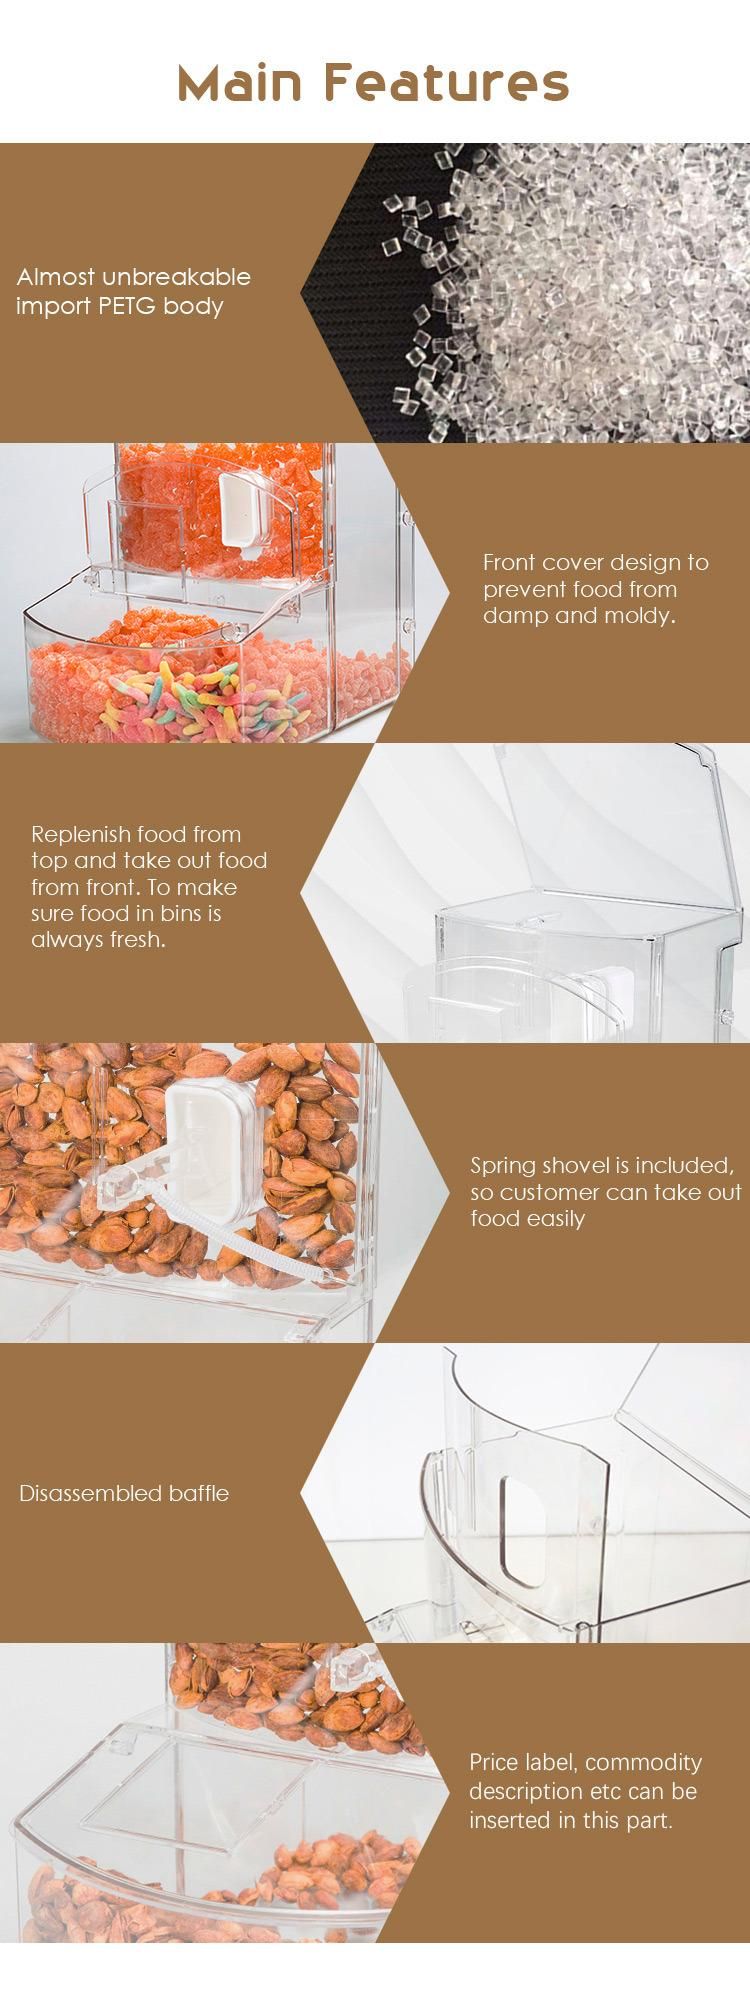 Retail Store Bulk Food Dispenser Bin for Candy